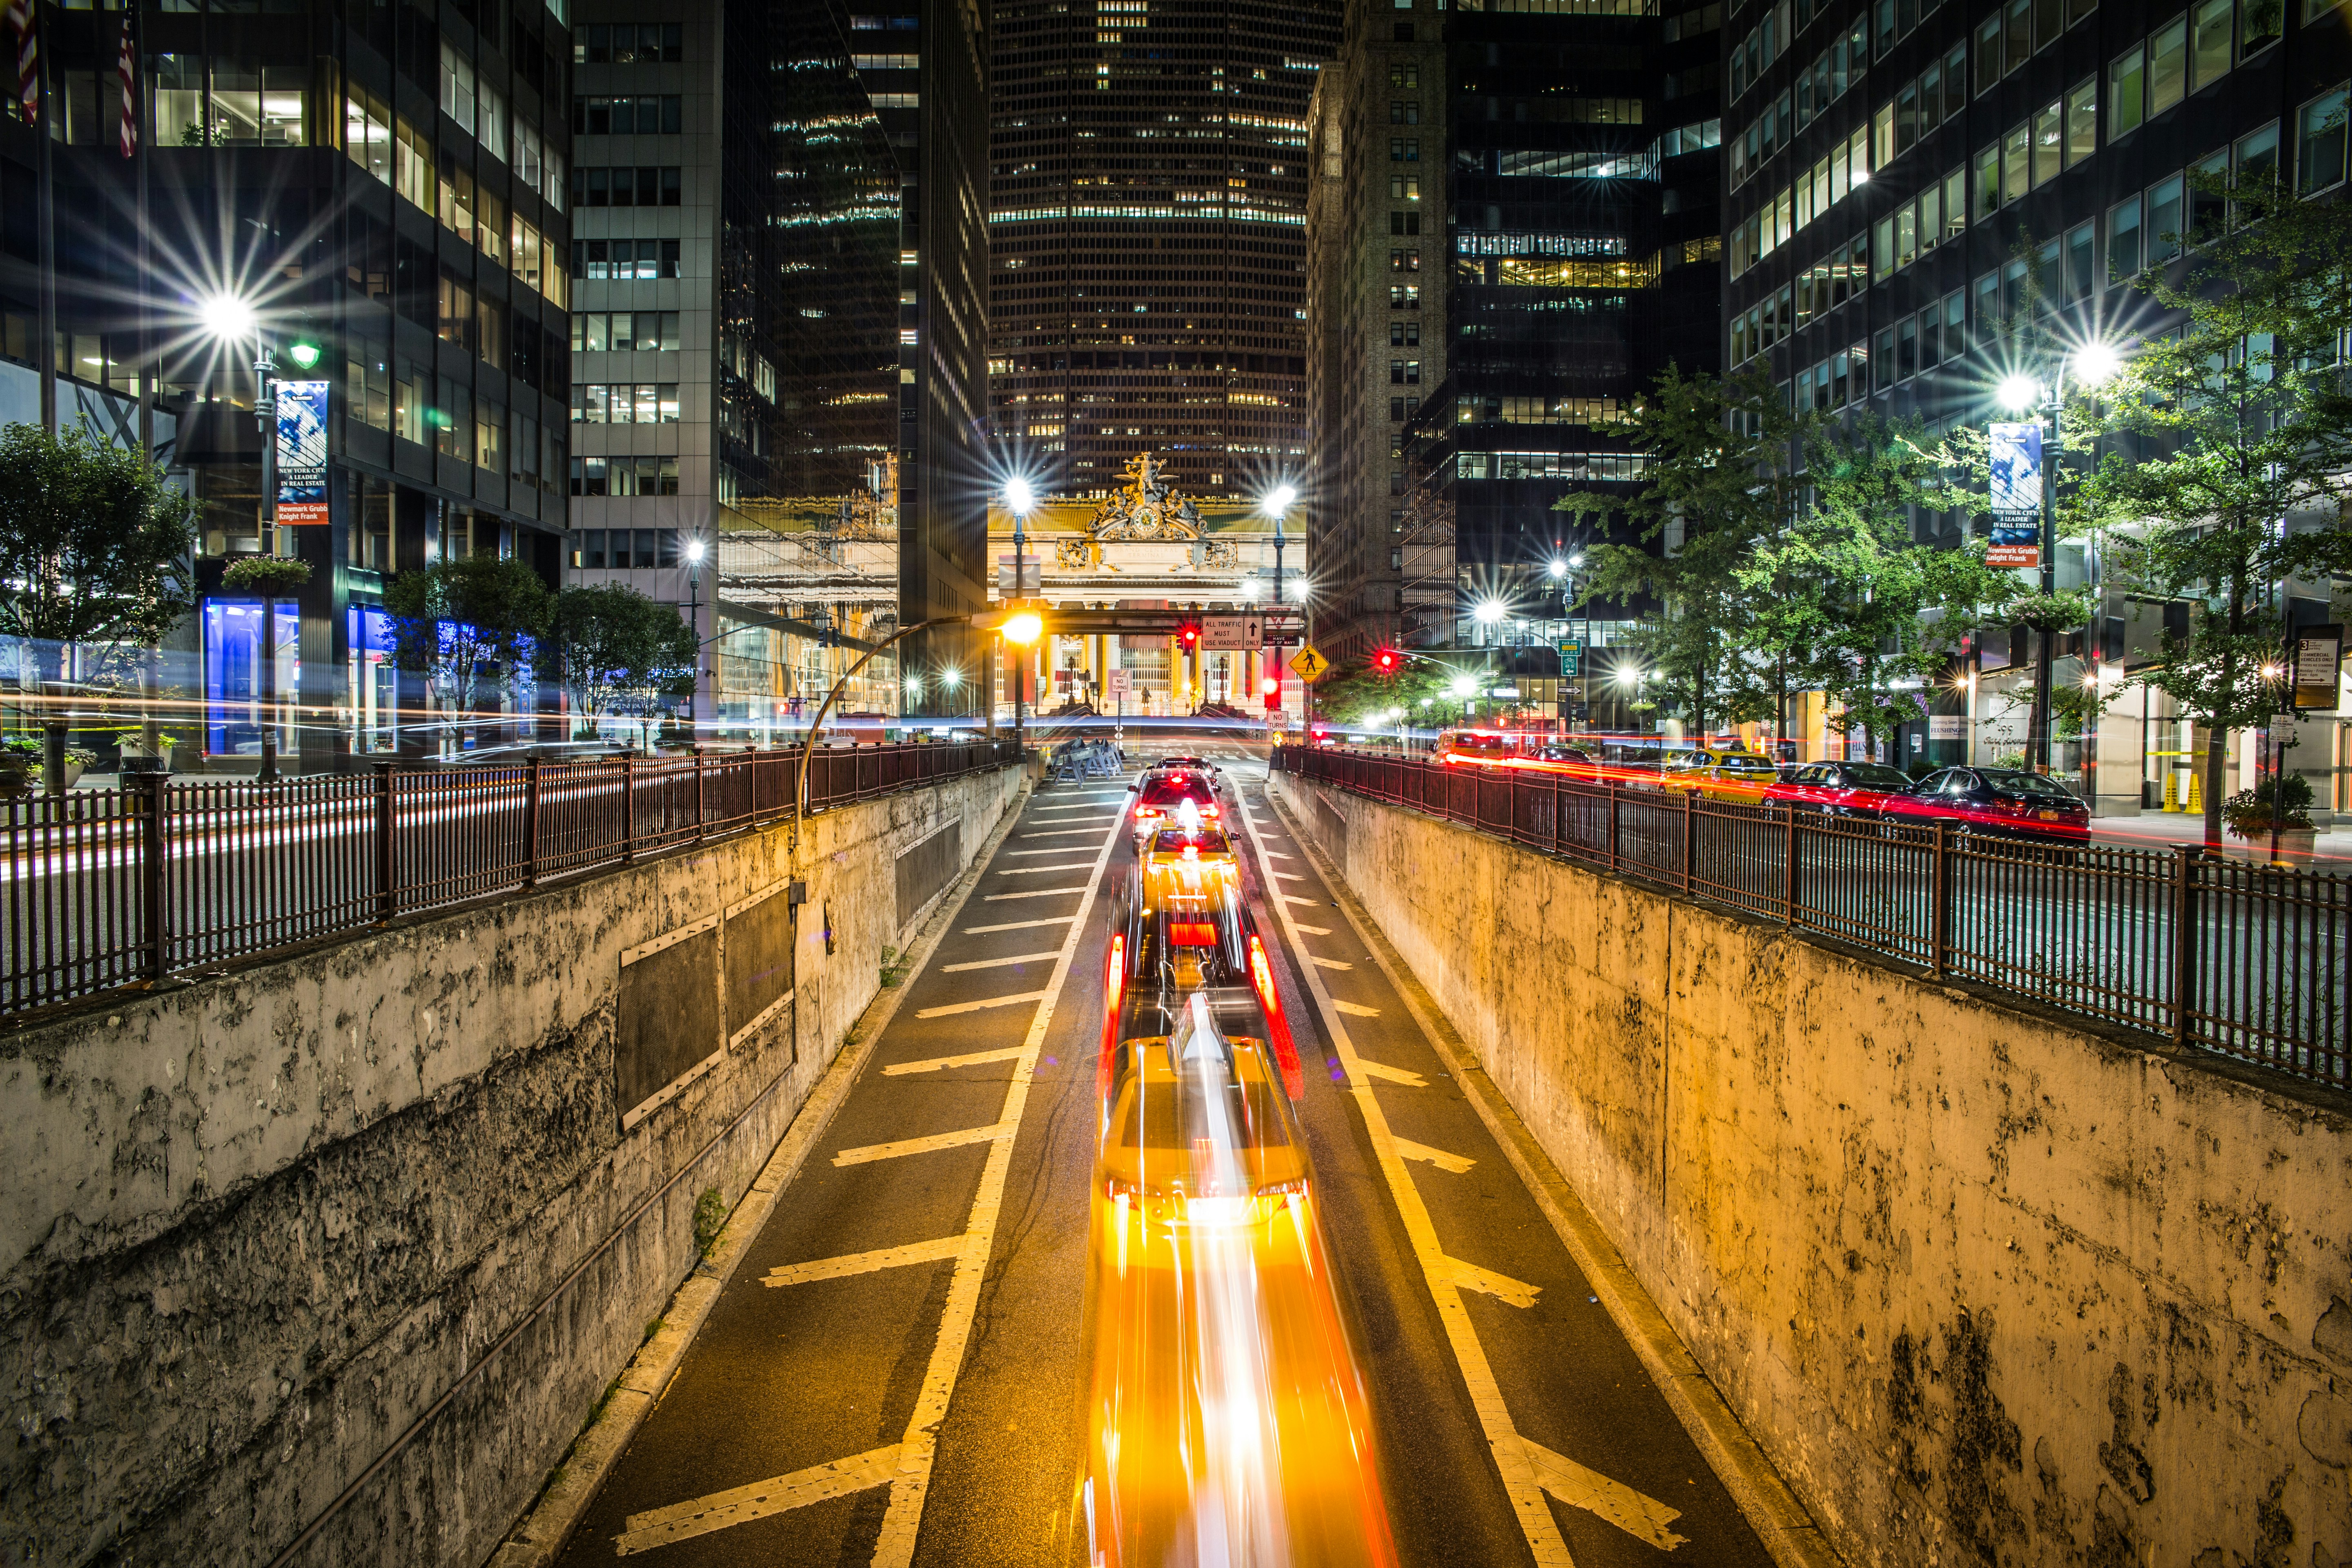 New York city center street at night-time